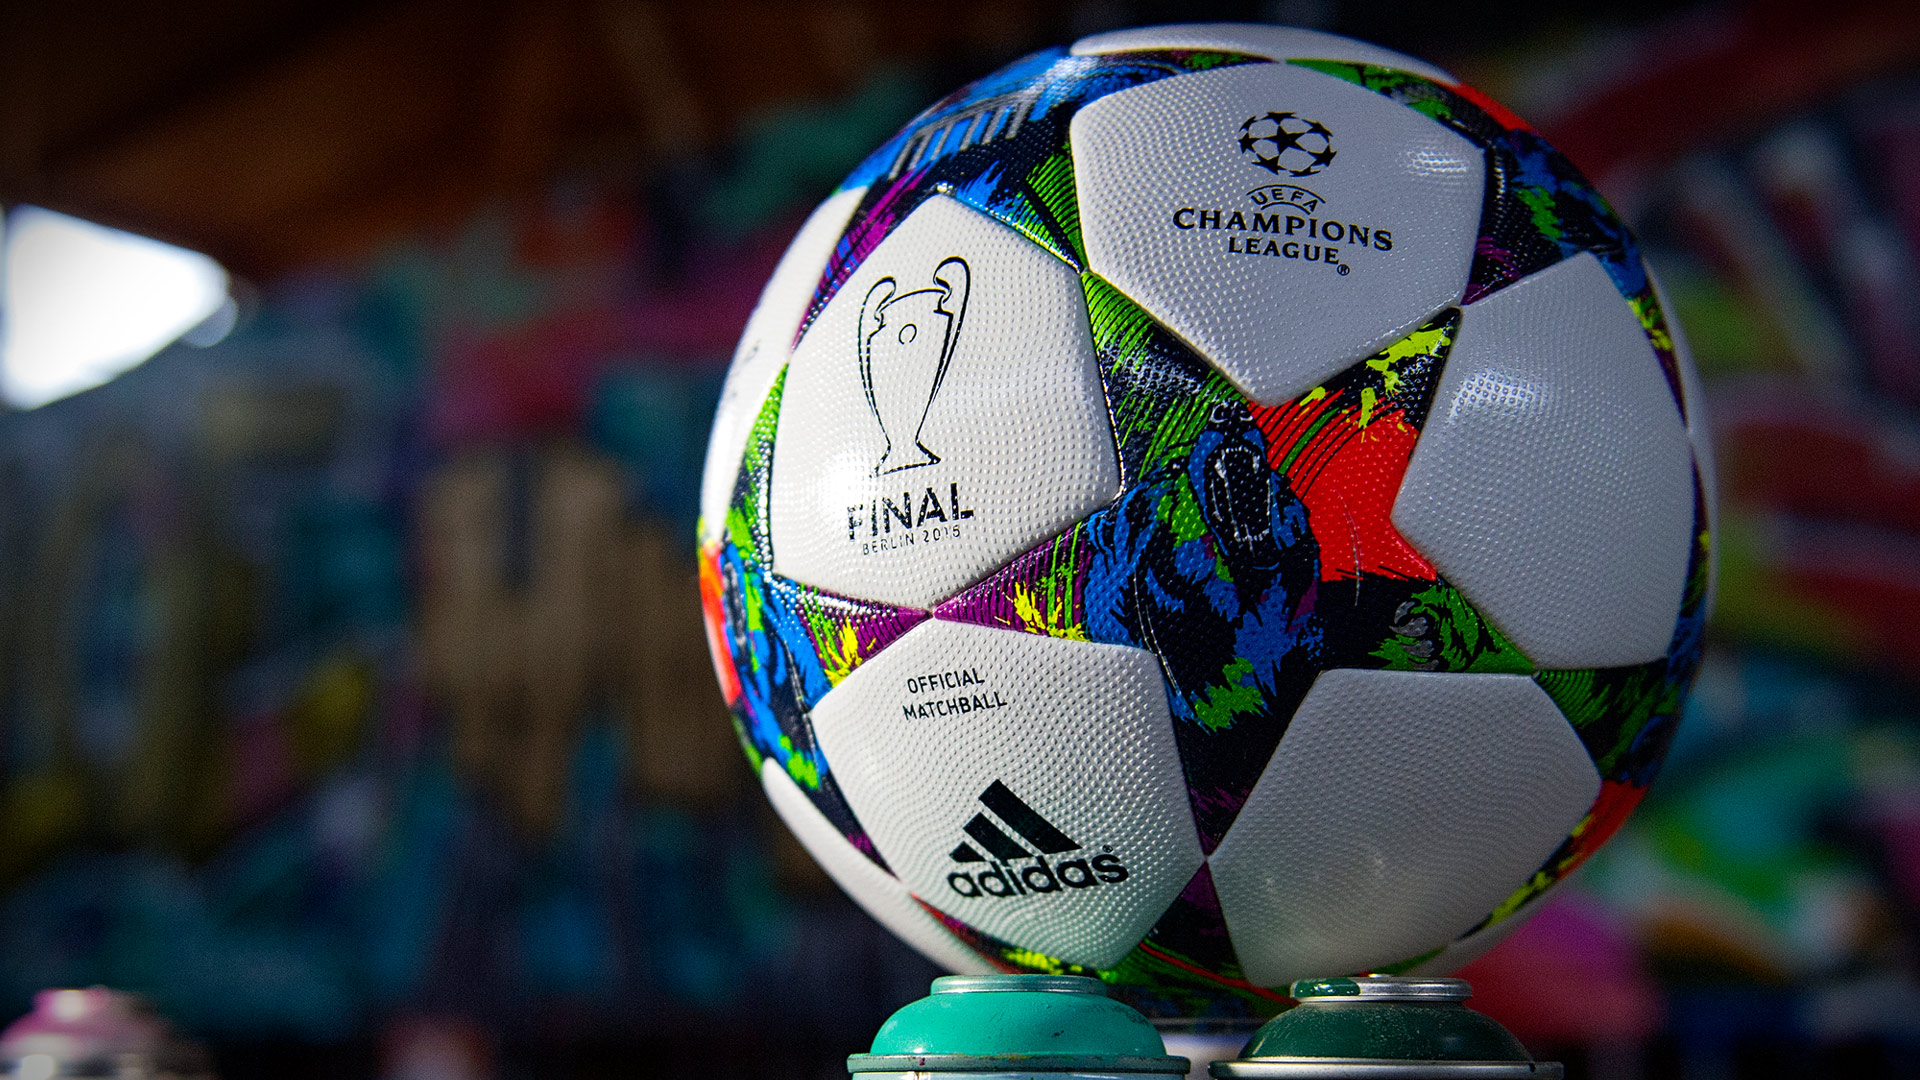 UEFA champions league 2015 ball wallpapers hd 1080p 1920x1080 Desktop